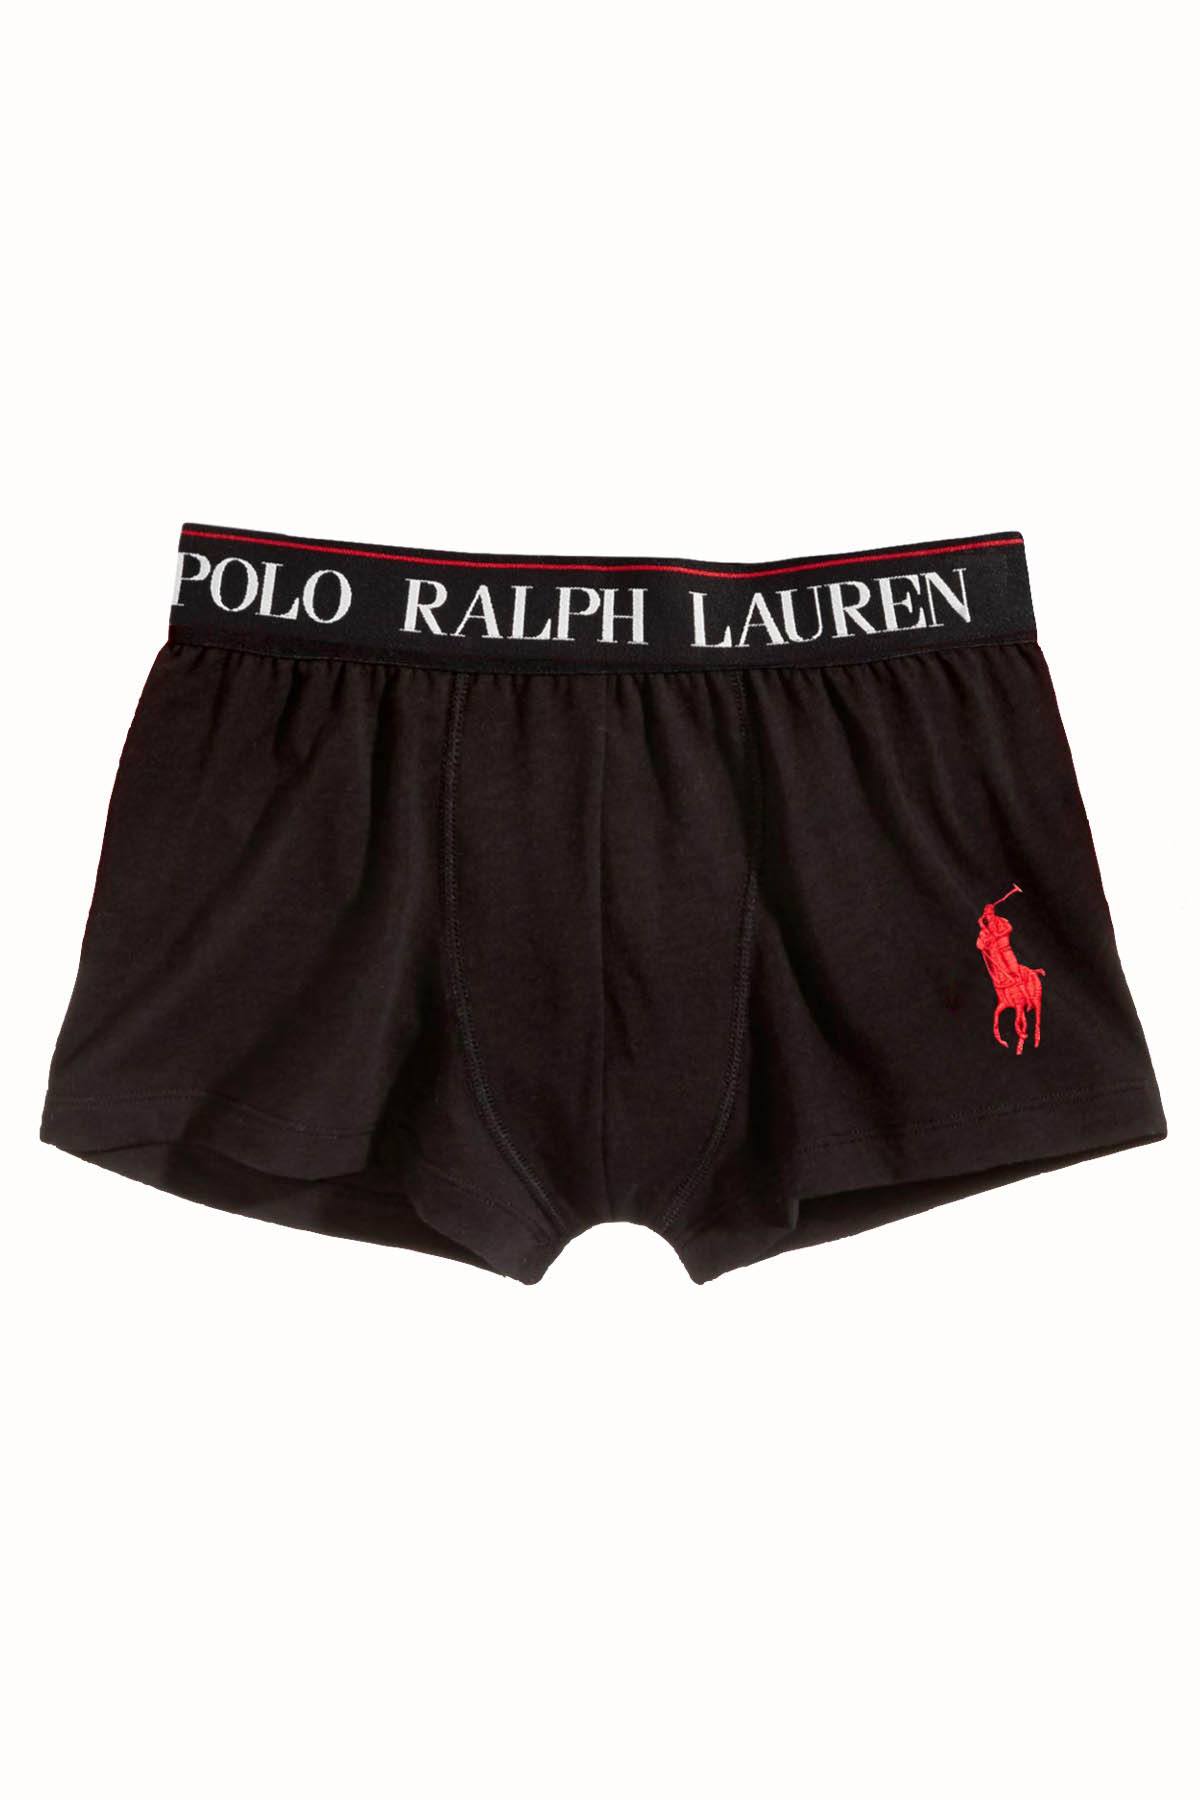 Polo Ralph Lauren Black Boxer Brief